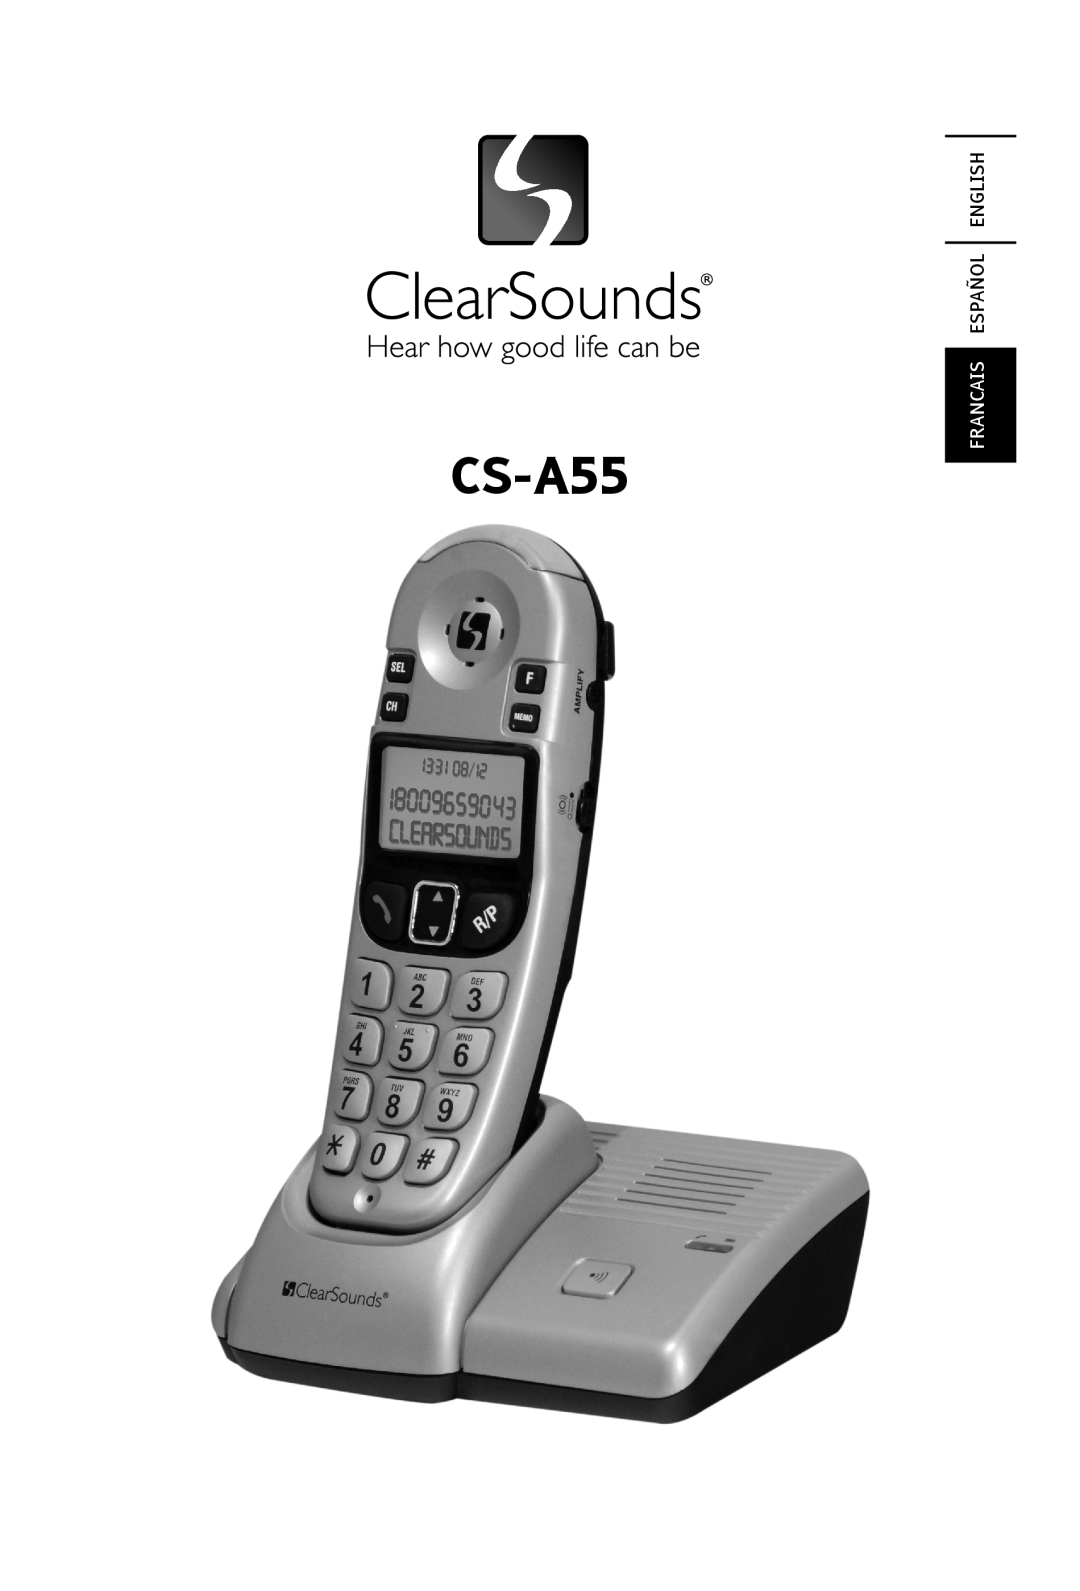 ClearSounds CS-A55 manual Francais Español English 